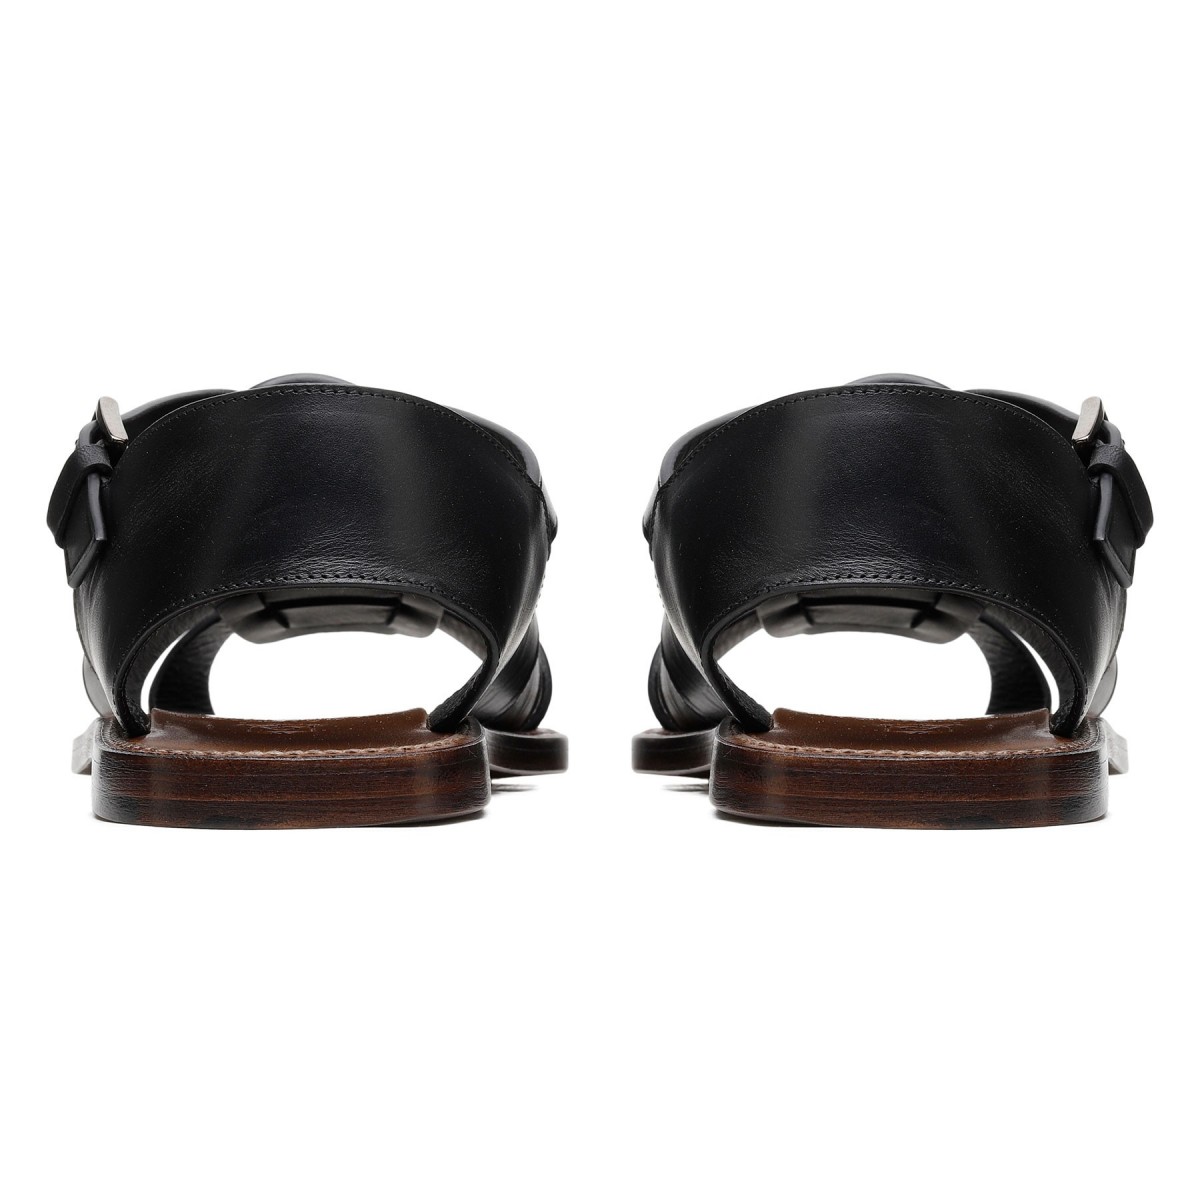 Black leather gladiator sandals